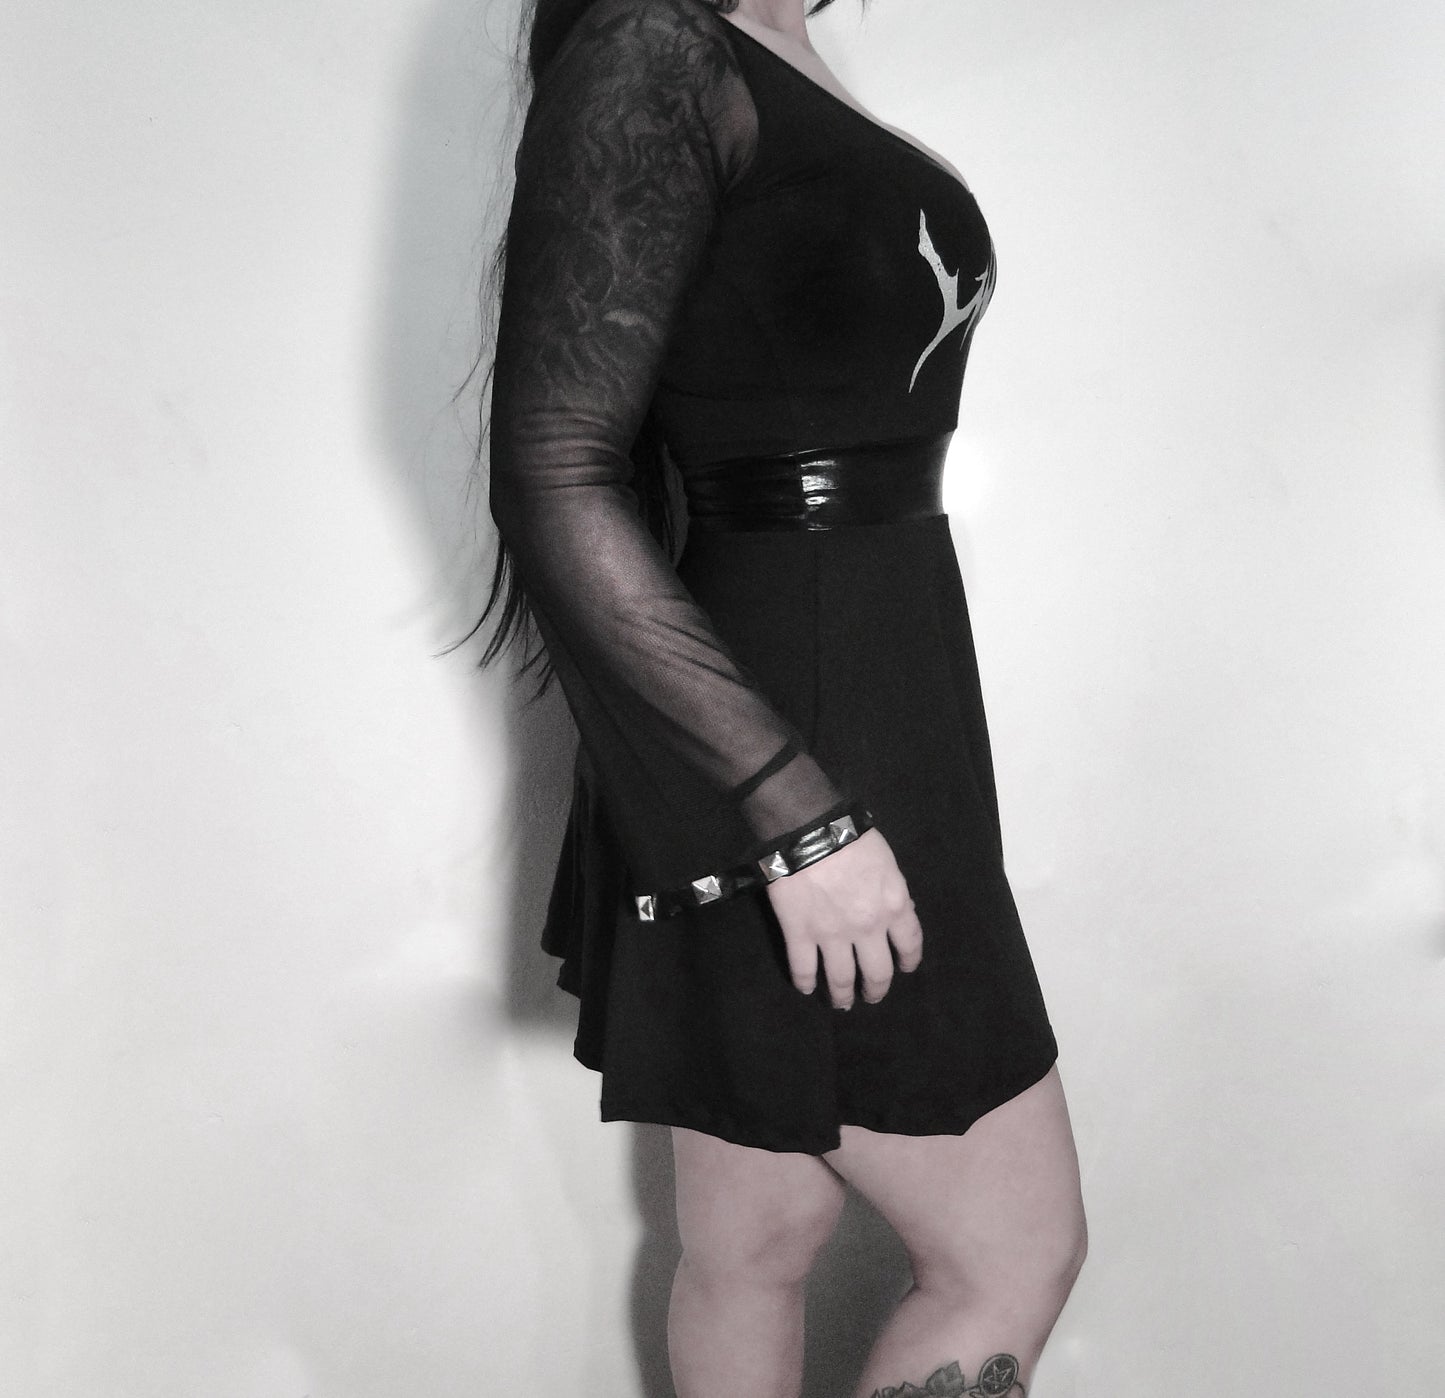 Watain ⇹ Black metal mini dress ⇹ Long sleeve dress ⇹ shiny dress - transparency dress ⇹ Handmade dress ⇹ pvc dress ⇹ latex look